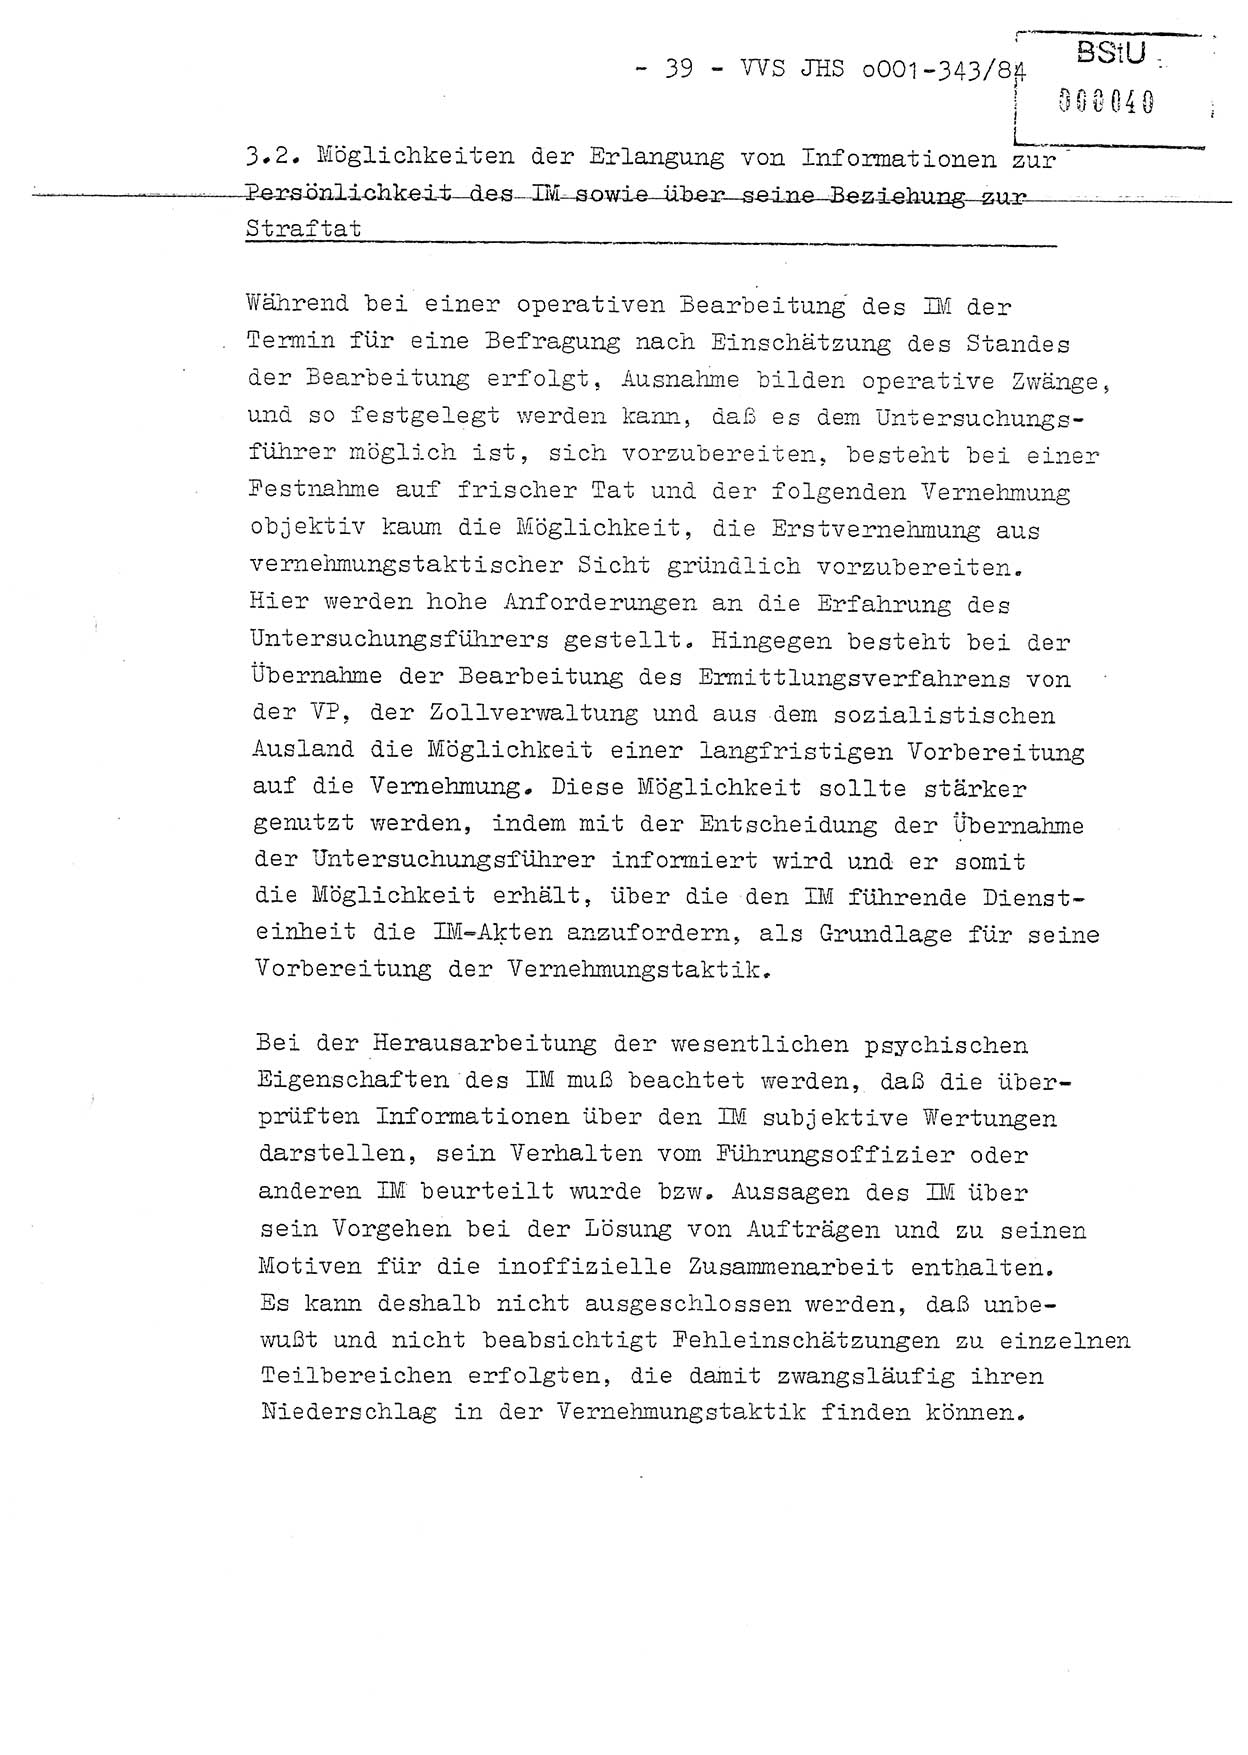 Diplomarbeit, Oberleutnant Bernd Michael (HA Ⅸ/5), Oberleutnant Peter Felber (HA IX/5), Ministerium für Staatssicherheit (MfS) [Deutsche Demokratische Republik (DDR)], Juristische Hochschule (JHS), Vertrauliche Verschlußsache (VVS) o001-343/84, Potsdam 1985, Seite 39 (Dipl.-Arb. MfS DDR JHS VVS o001-343/84 1985, S. 39)